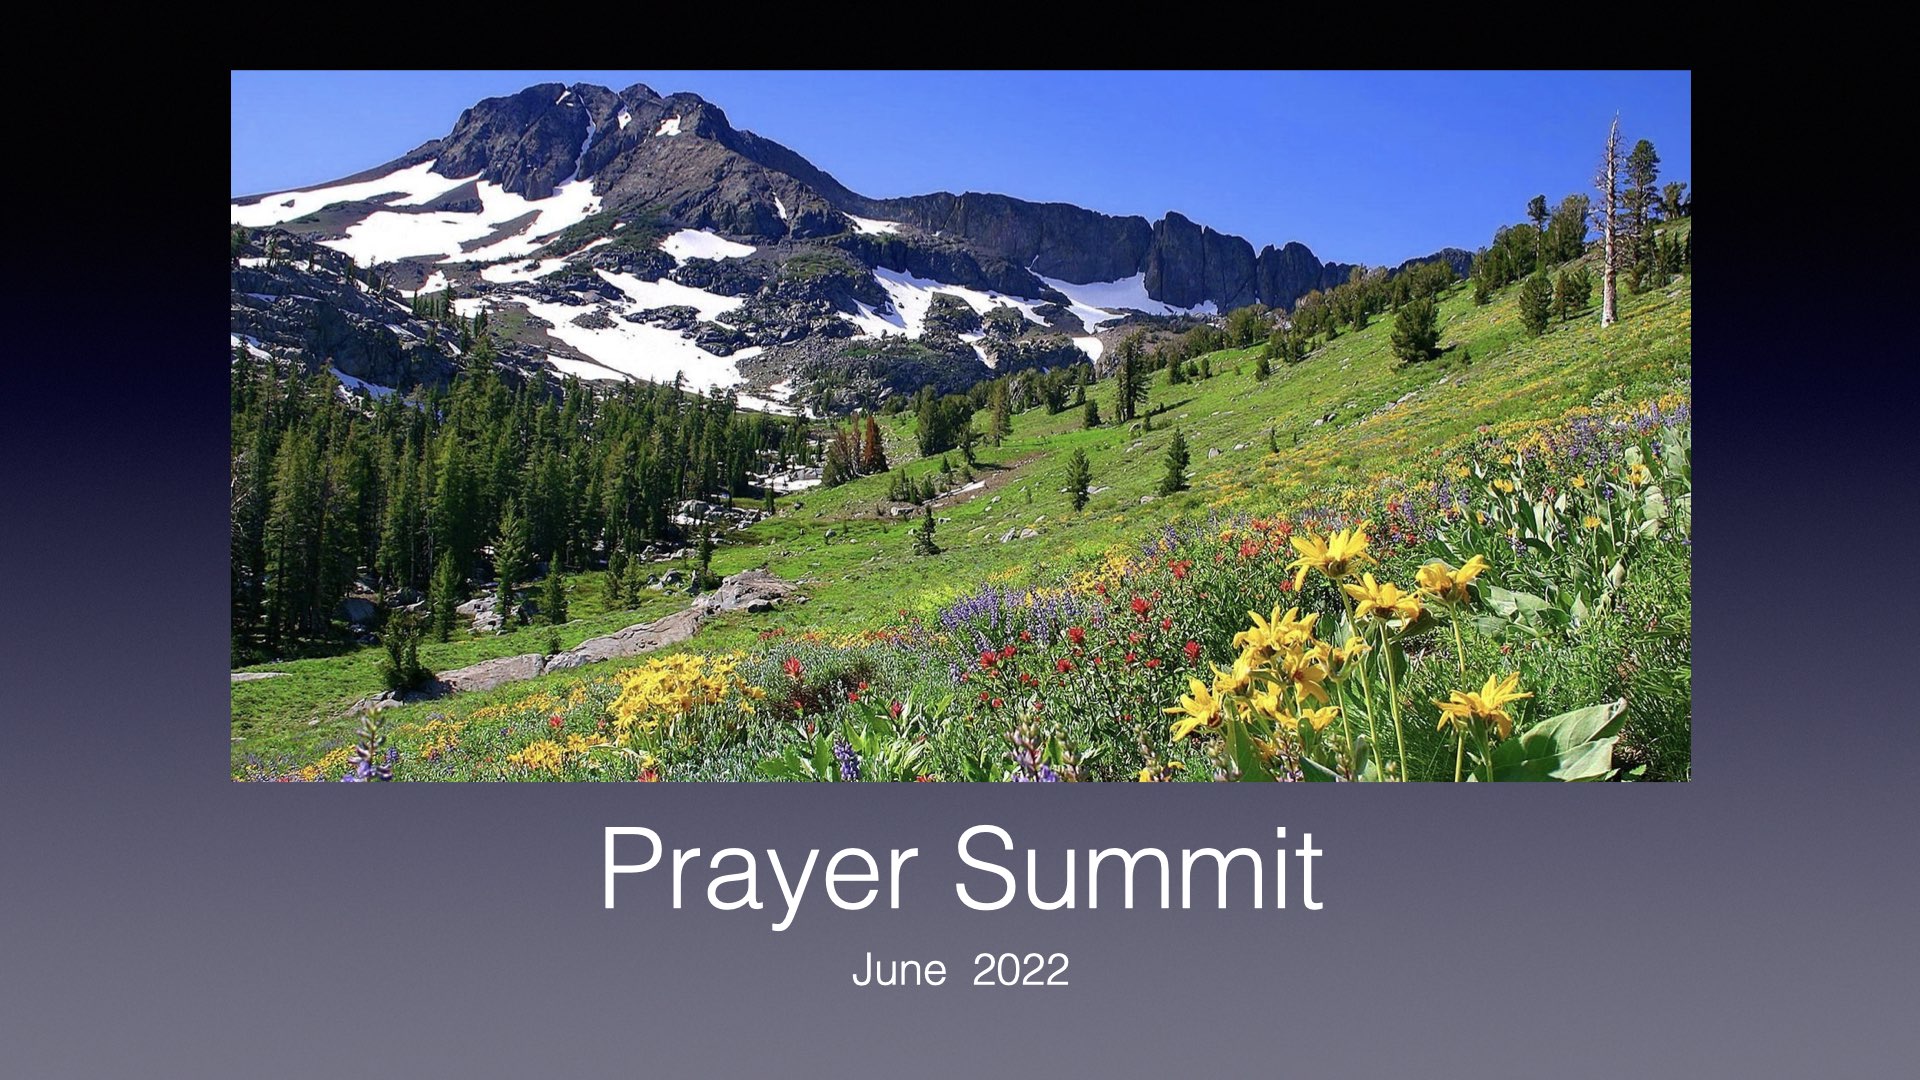 Prayer Summit by Lance Steeves